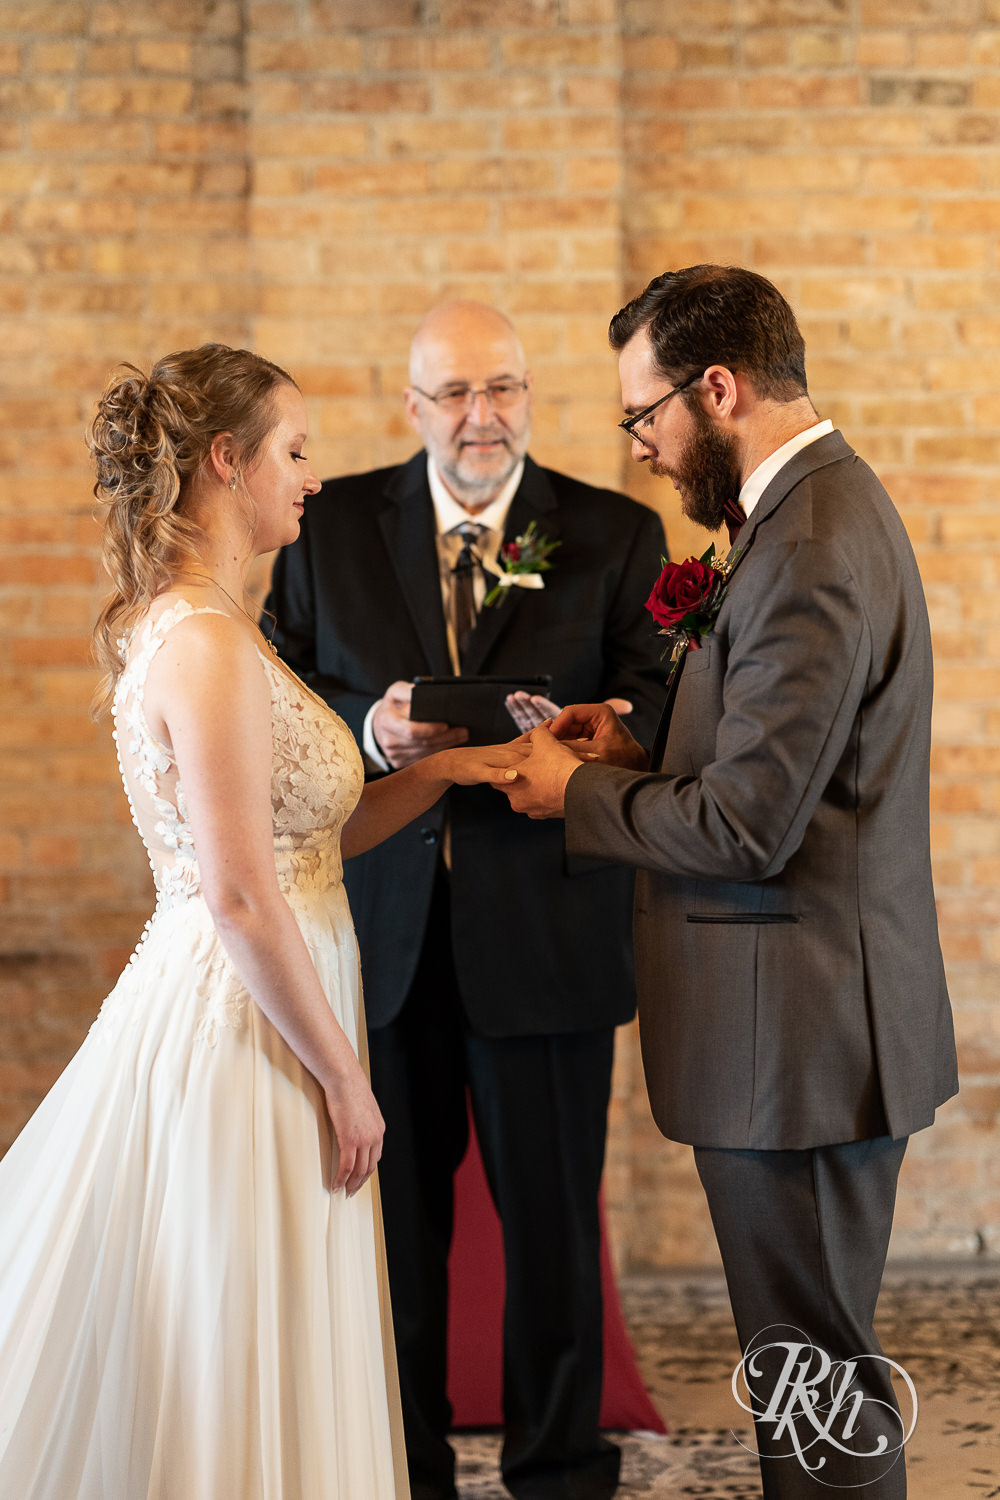 Wedding ceremony at The Jerome Event Center in Delano, Minnesota.